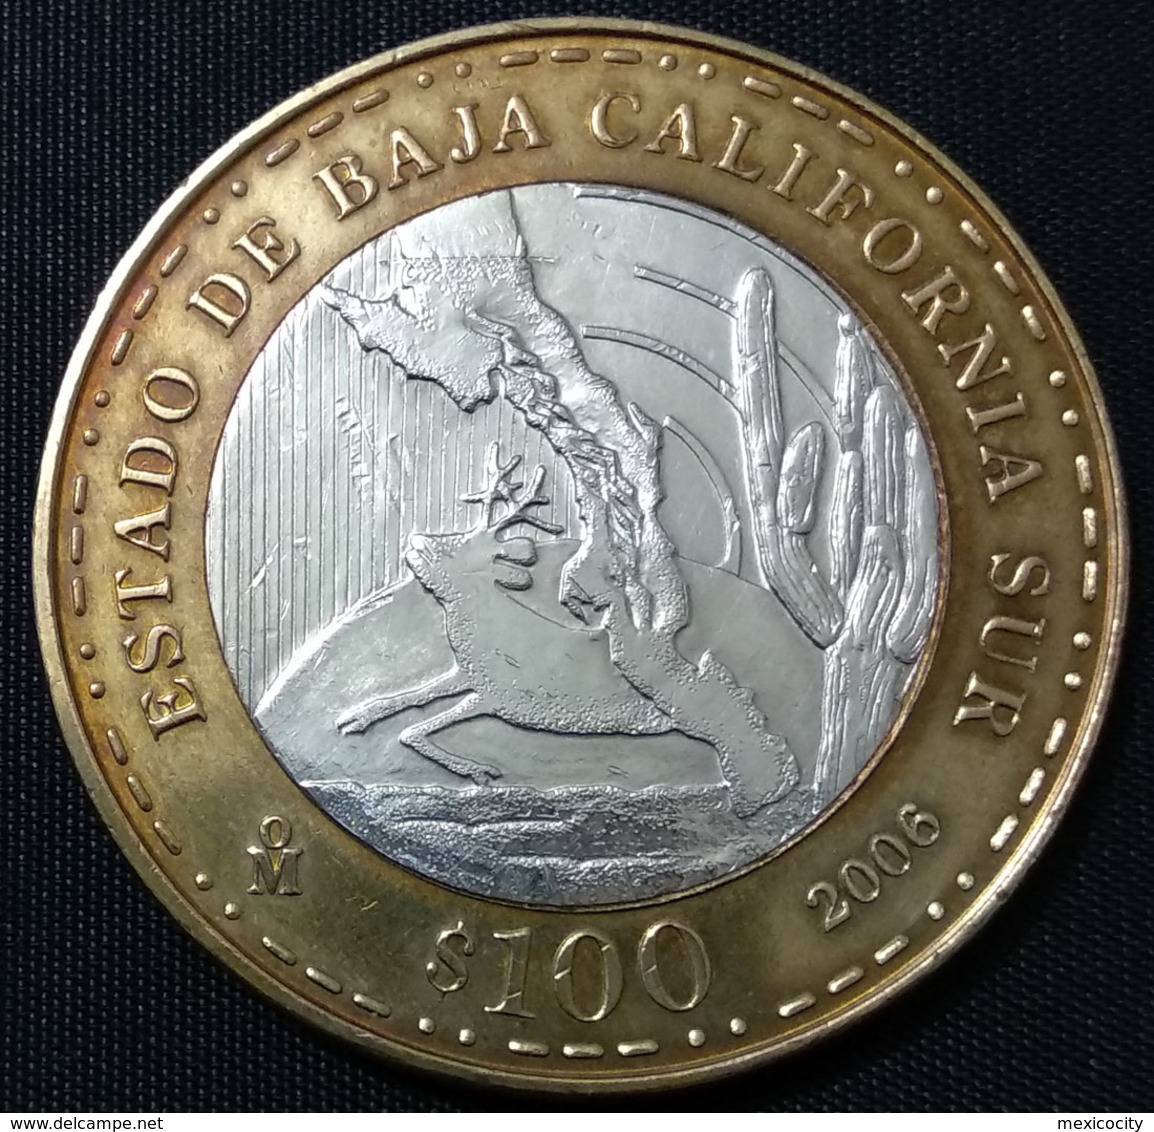 MEXICO 2006 $100 SOUTH BAJA CALIFORNIA BIMETALLIC Silver Core Original Shine See Image, Bargain Priced - Mexico